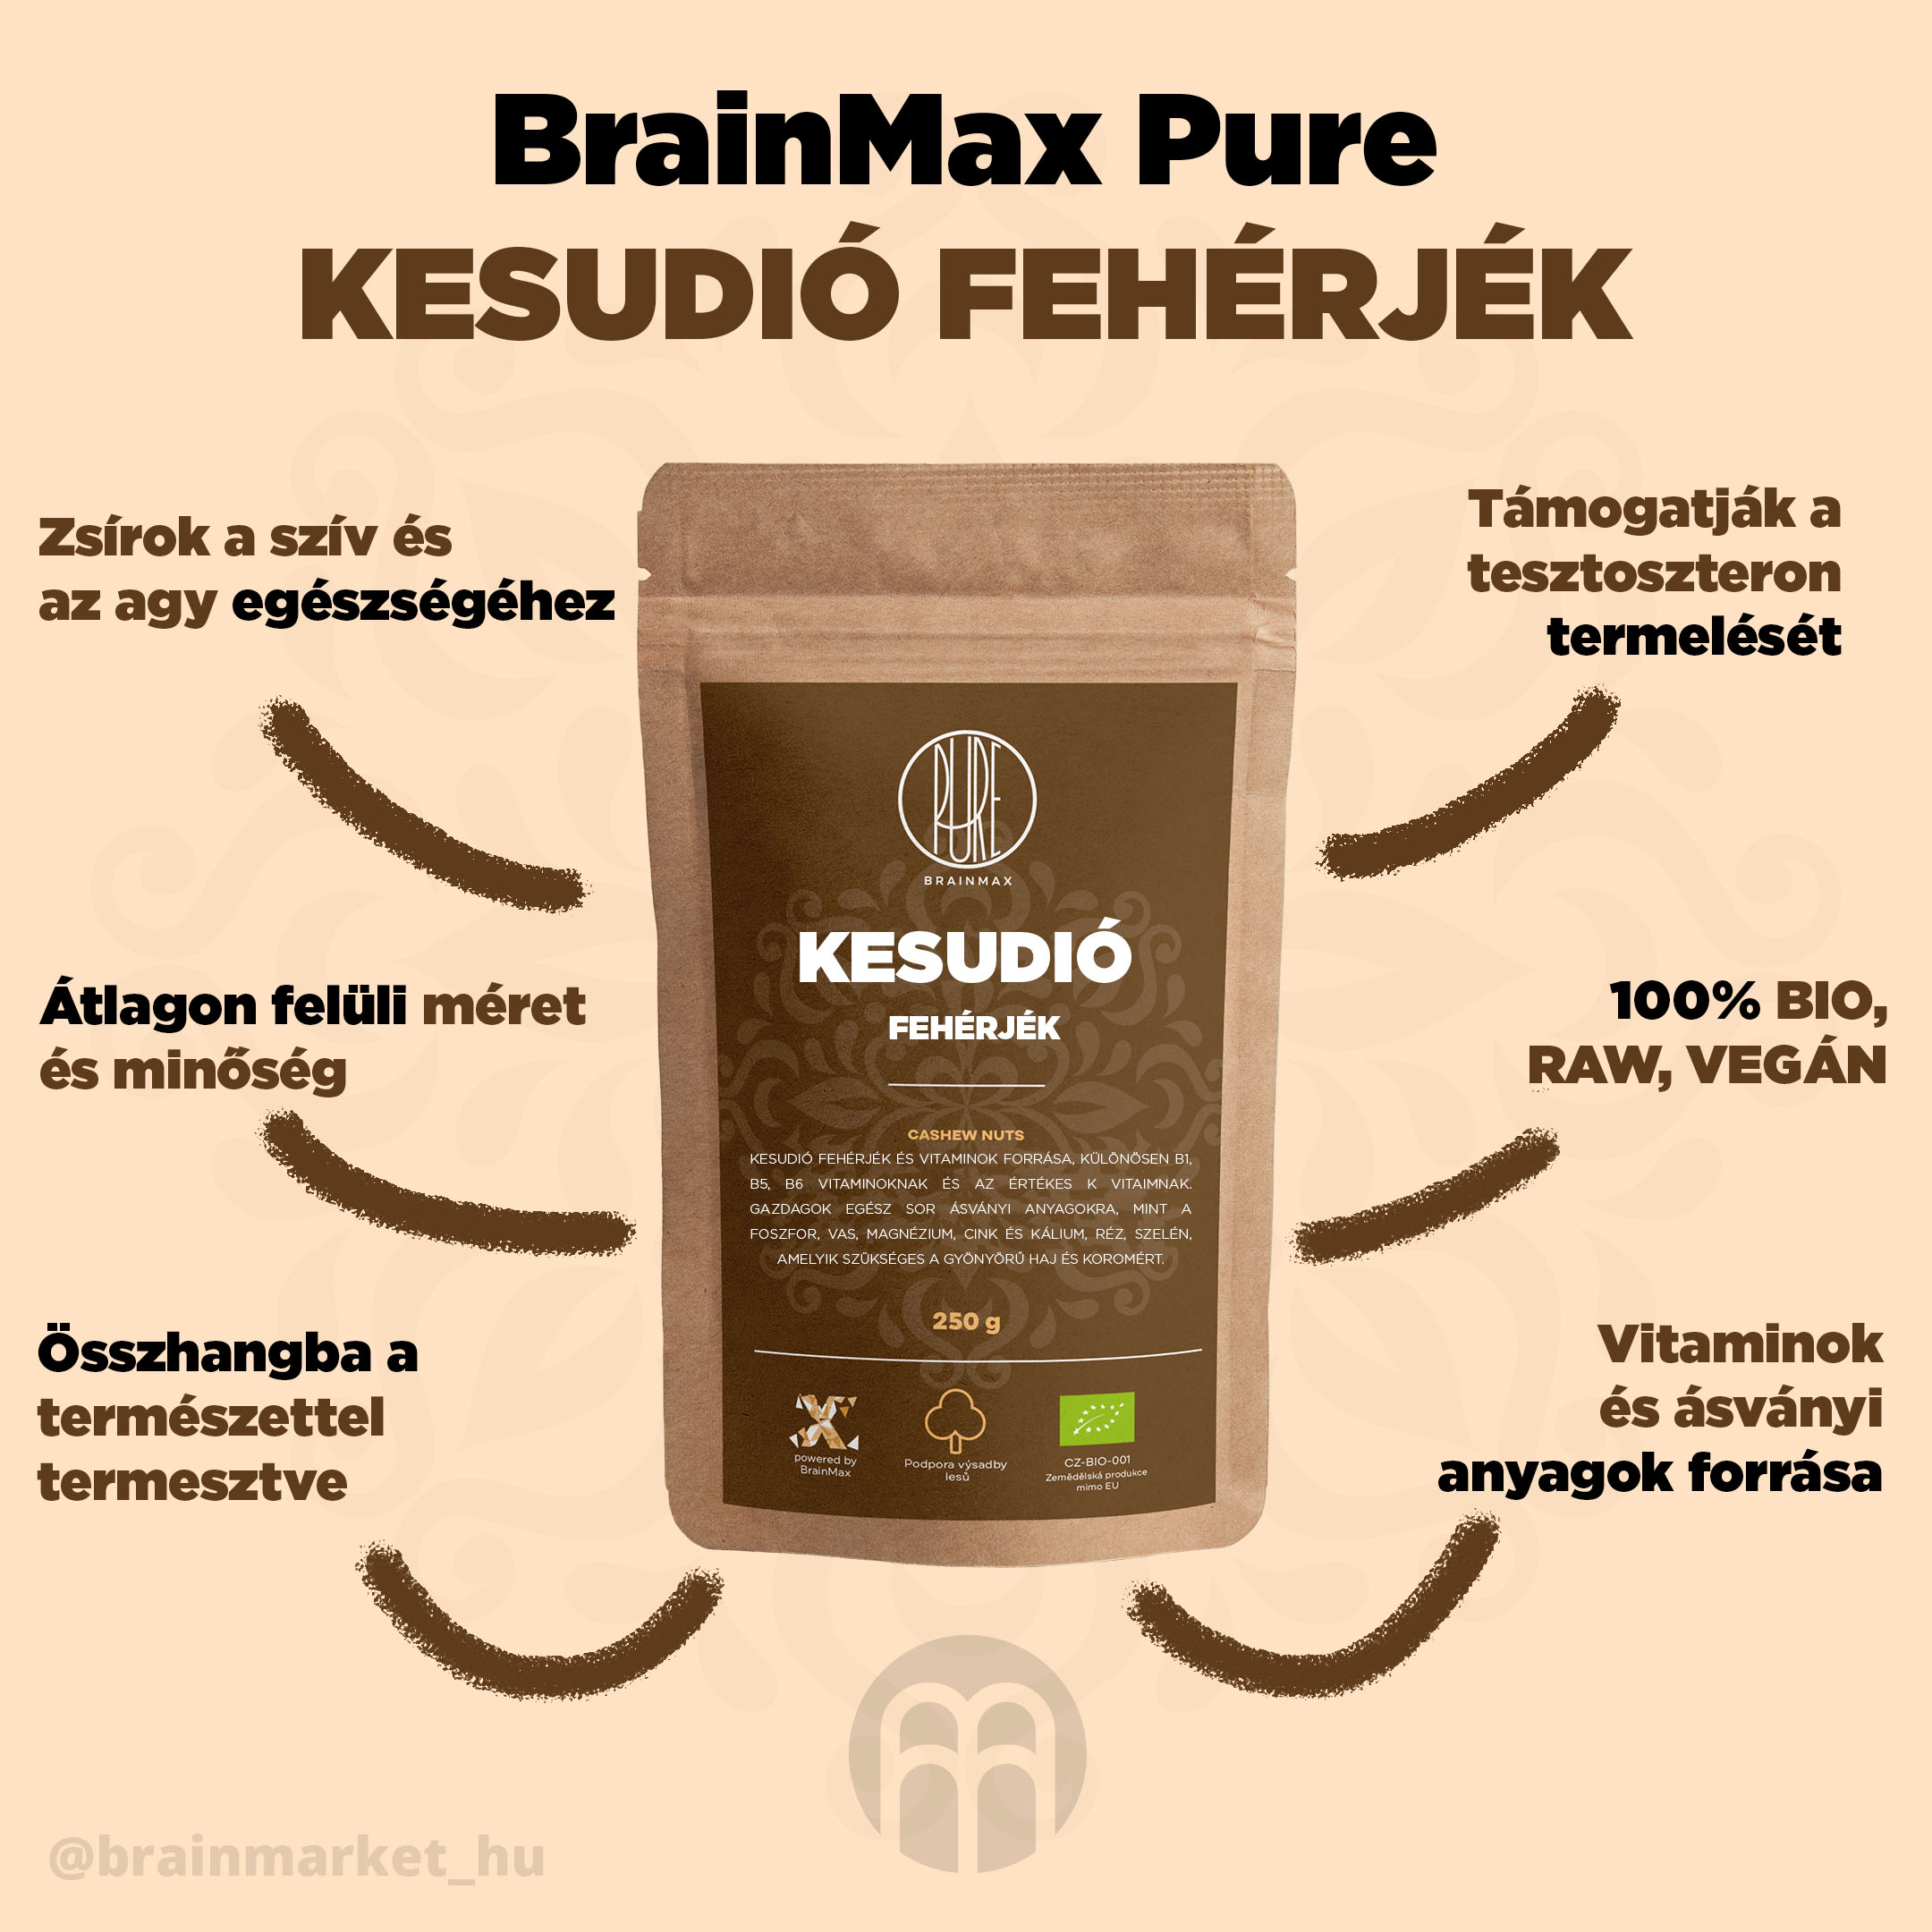 BrainMax tiszta kesudió - BrainMarket.cz